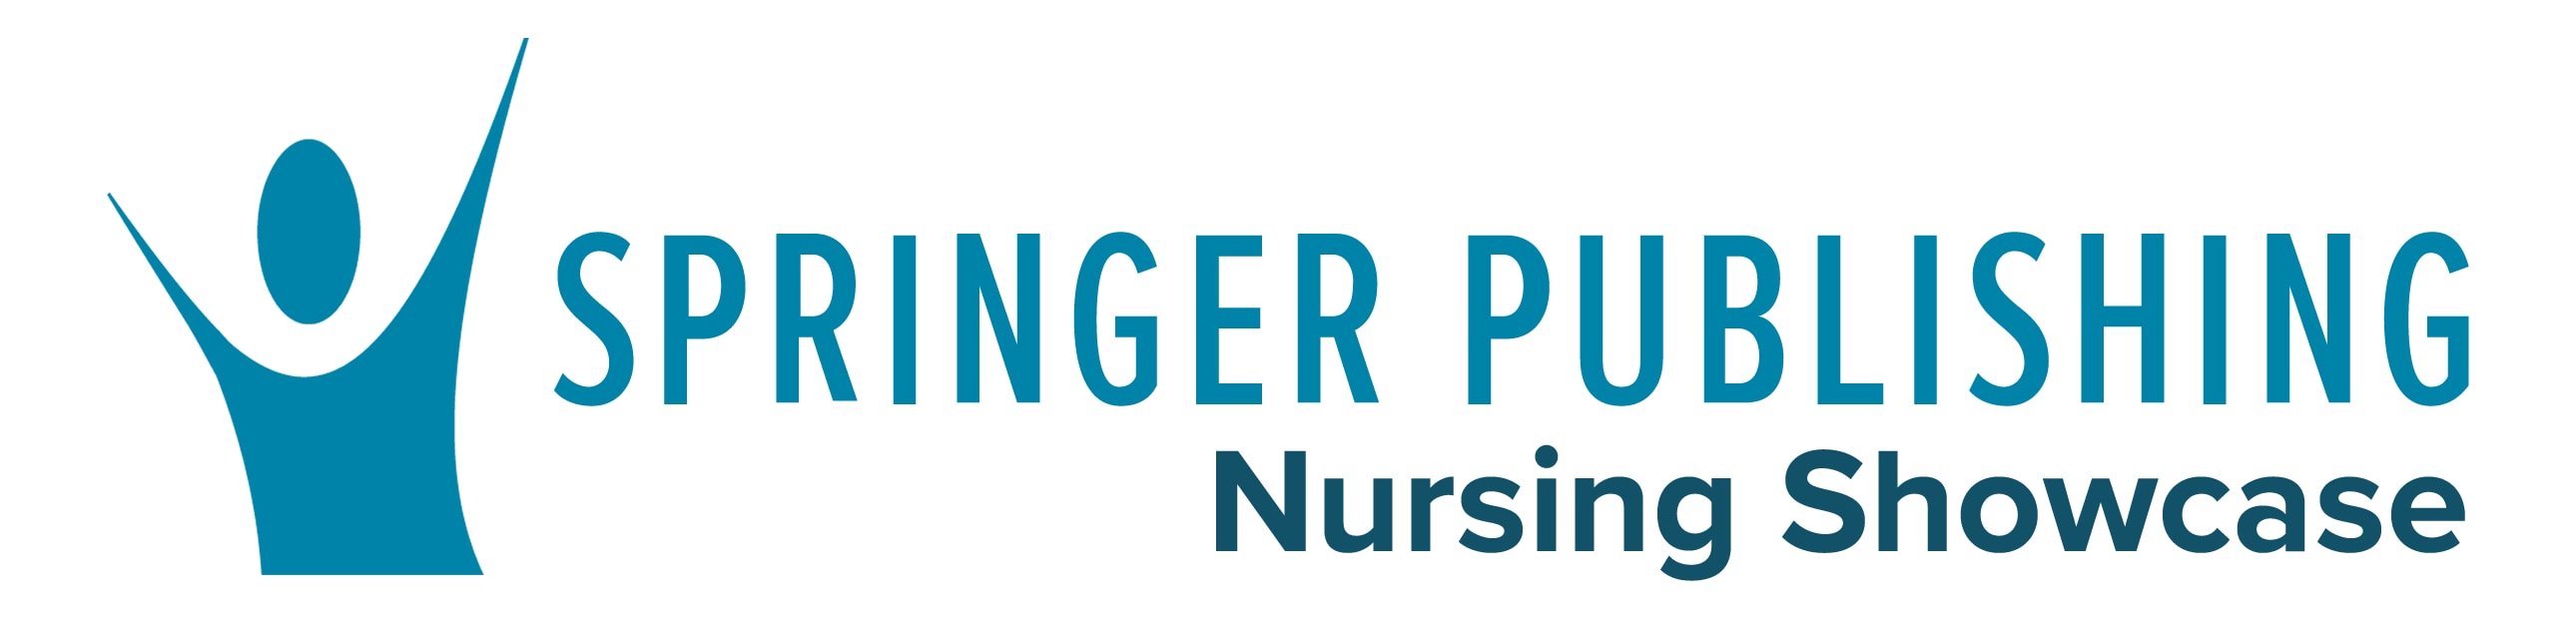 Springer Publishing Nursing Showcase